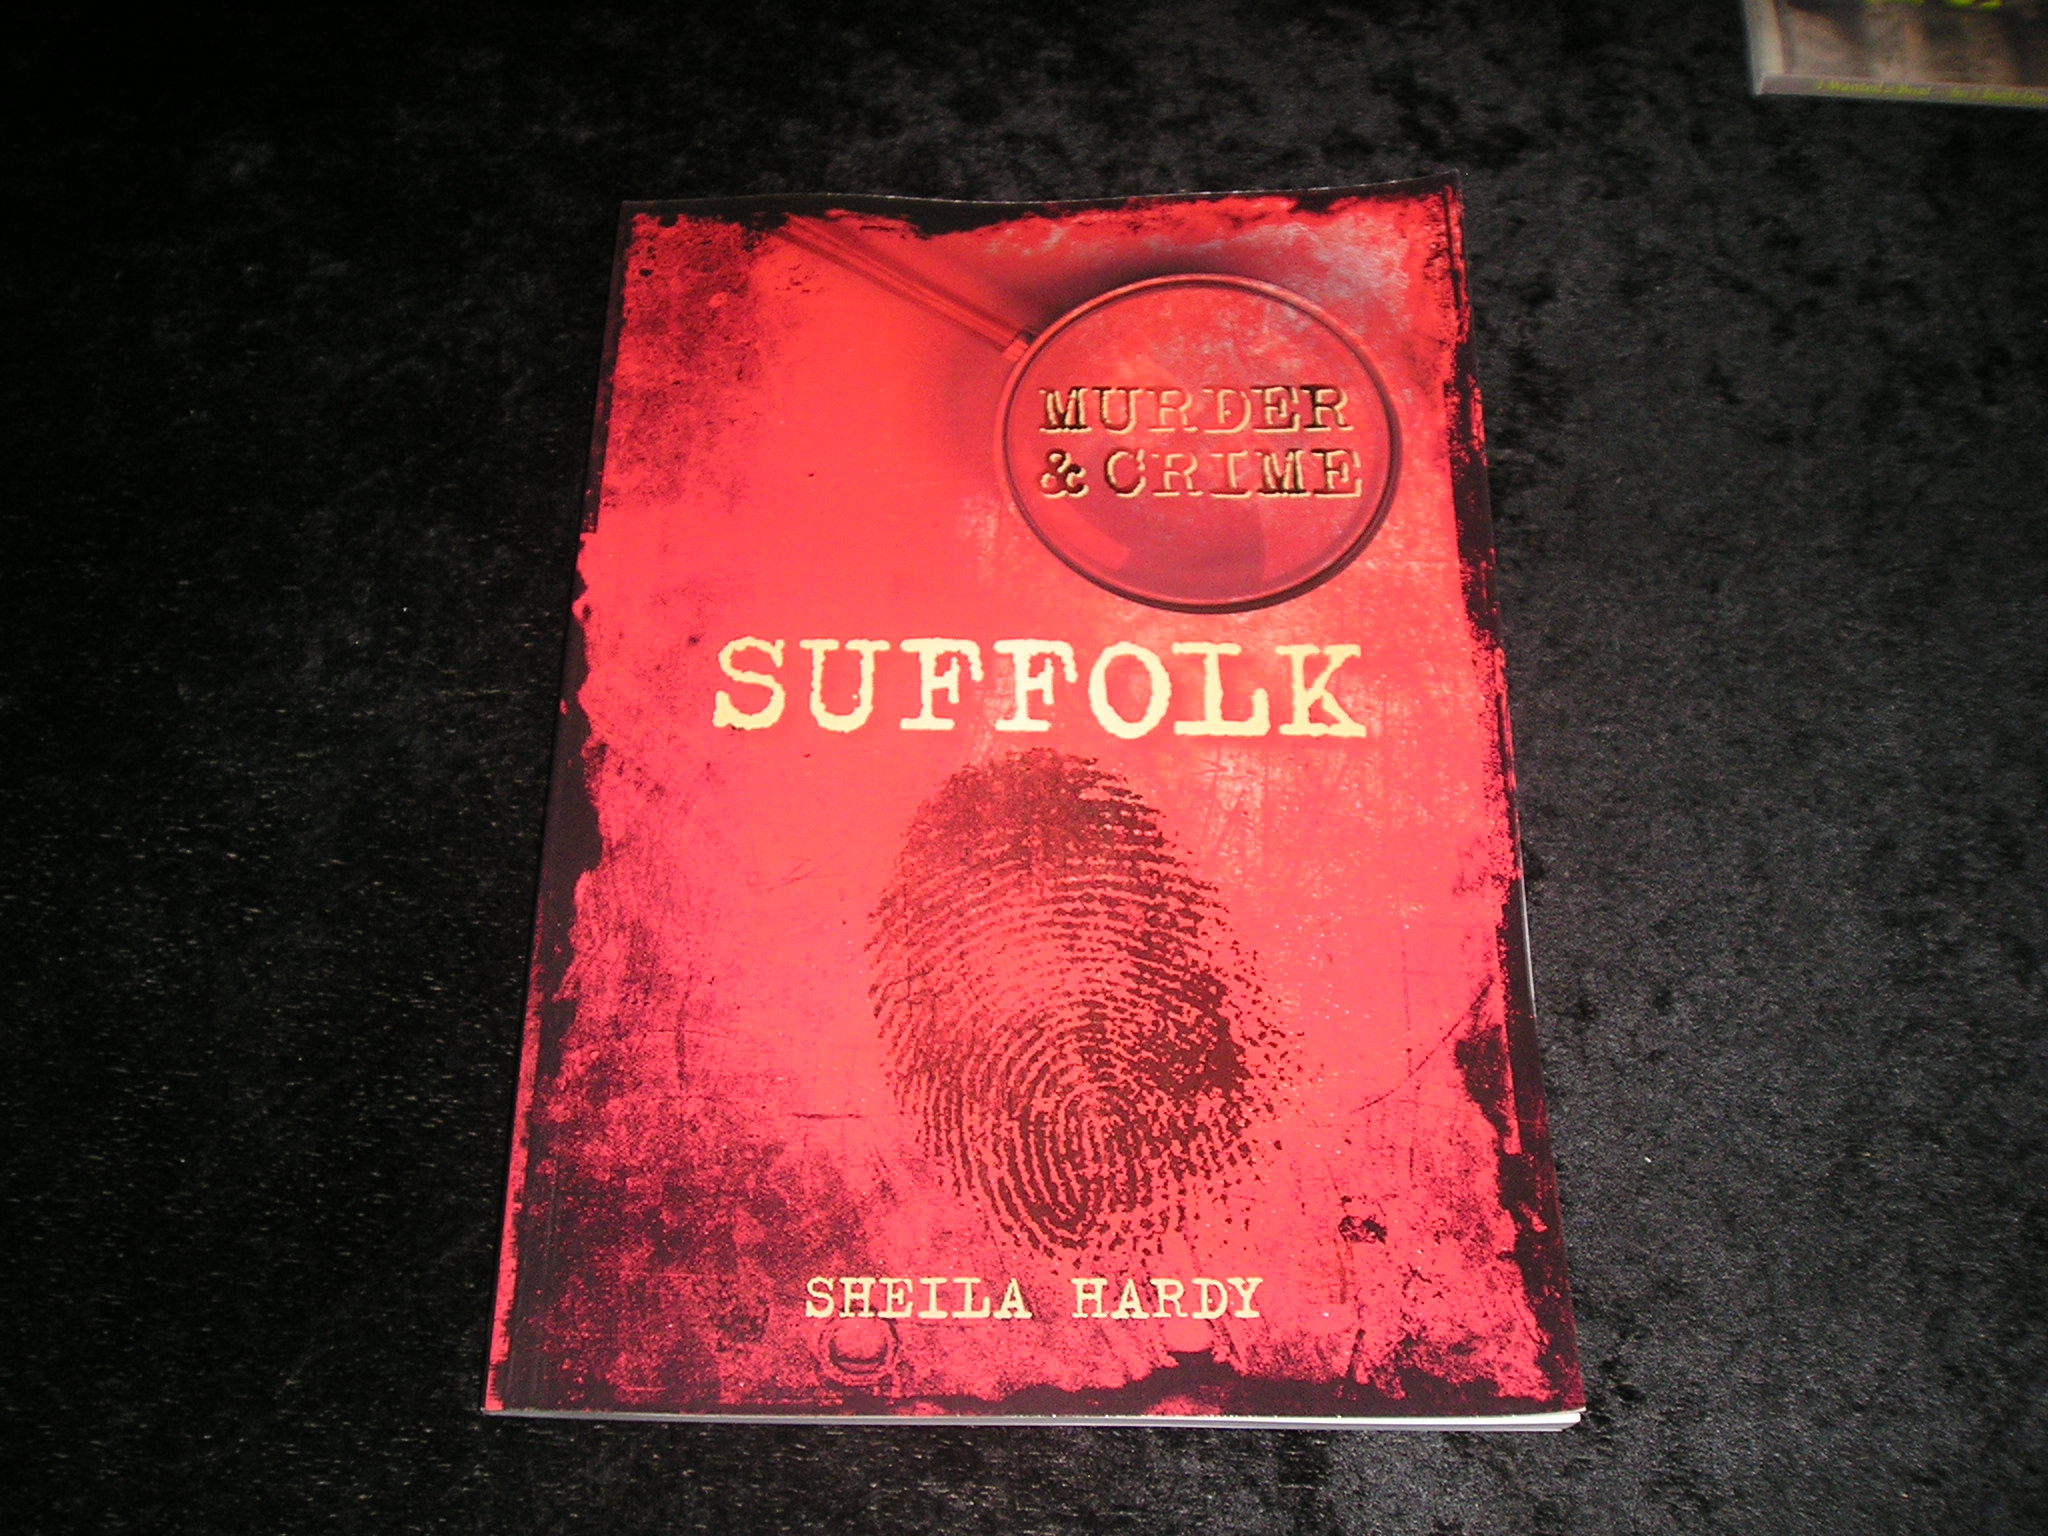 Suffolk Murder and crime